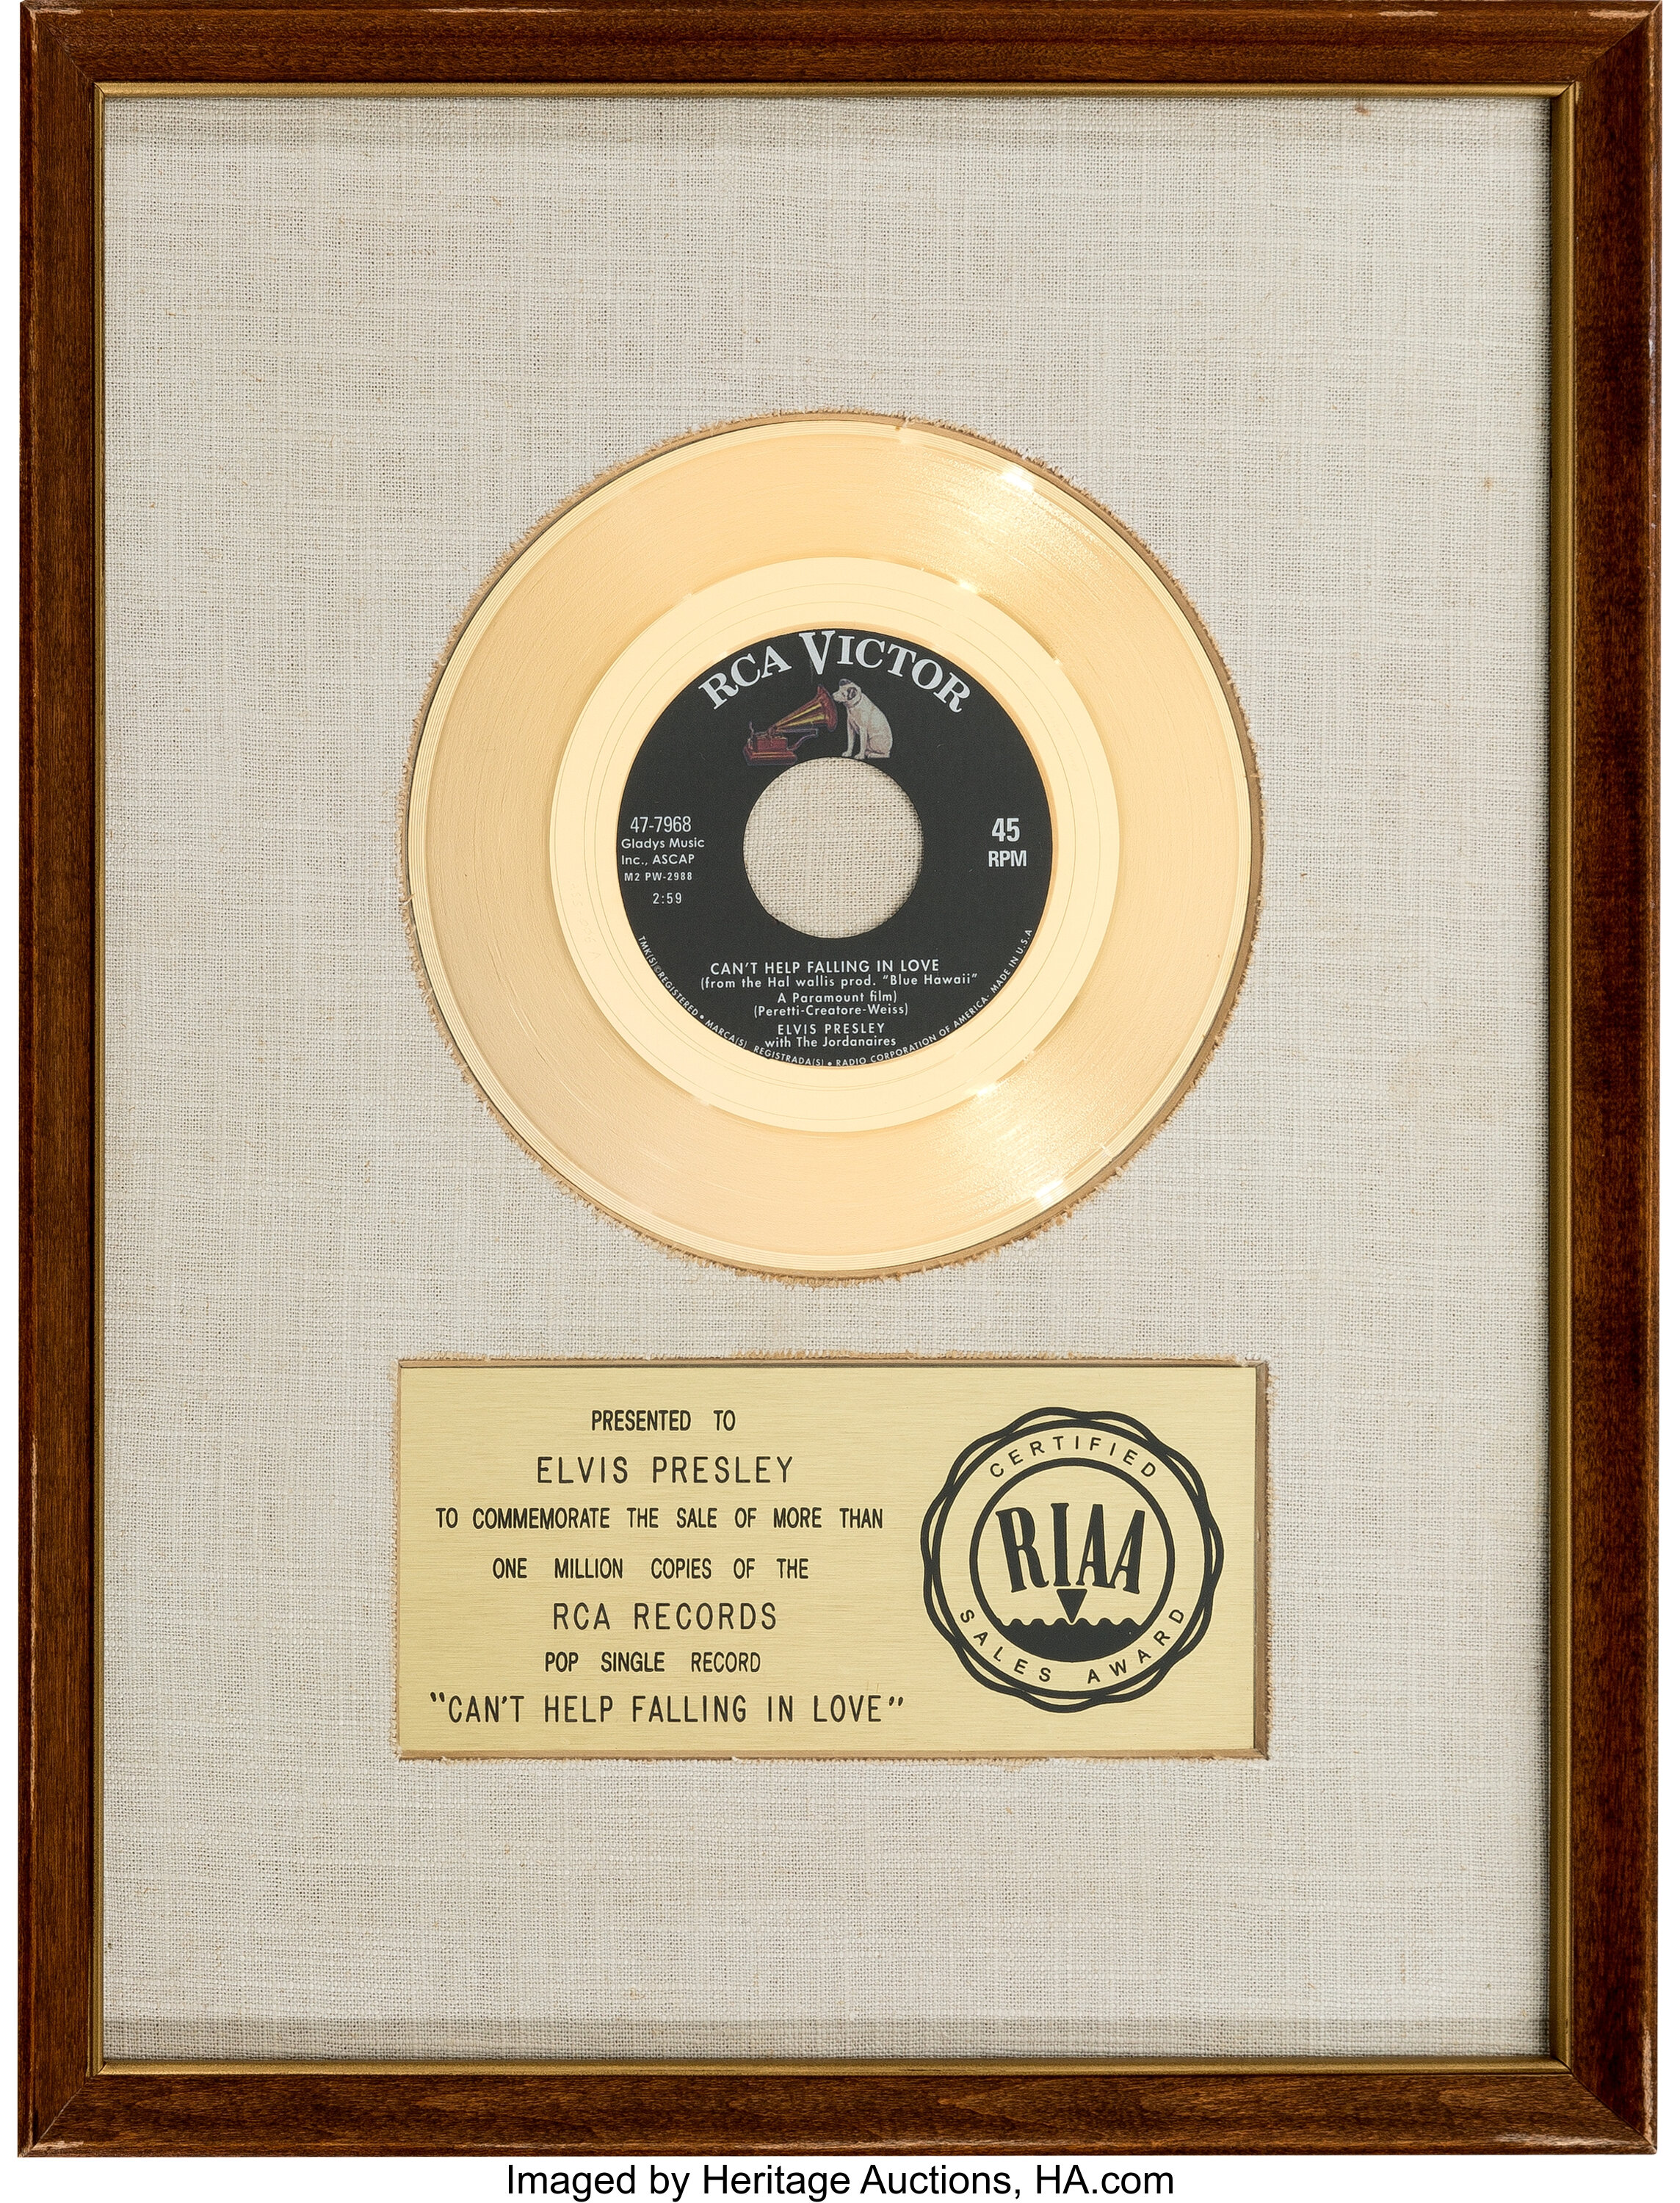 ELVIS PRESLEY 'CAN'T HELP FALLING IN LOVE' SIGNED GOLD CD DISC MEMORABILIA GIFT 